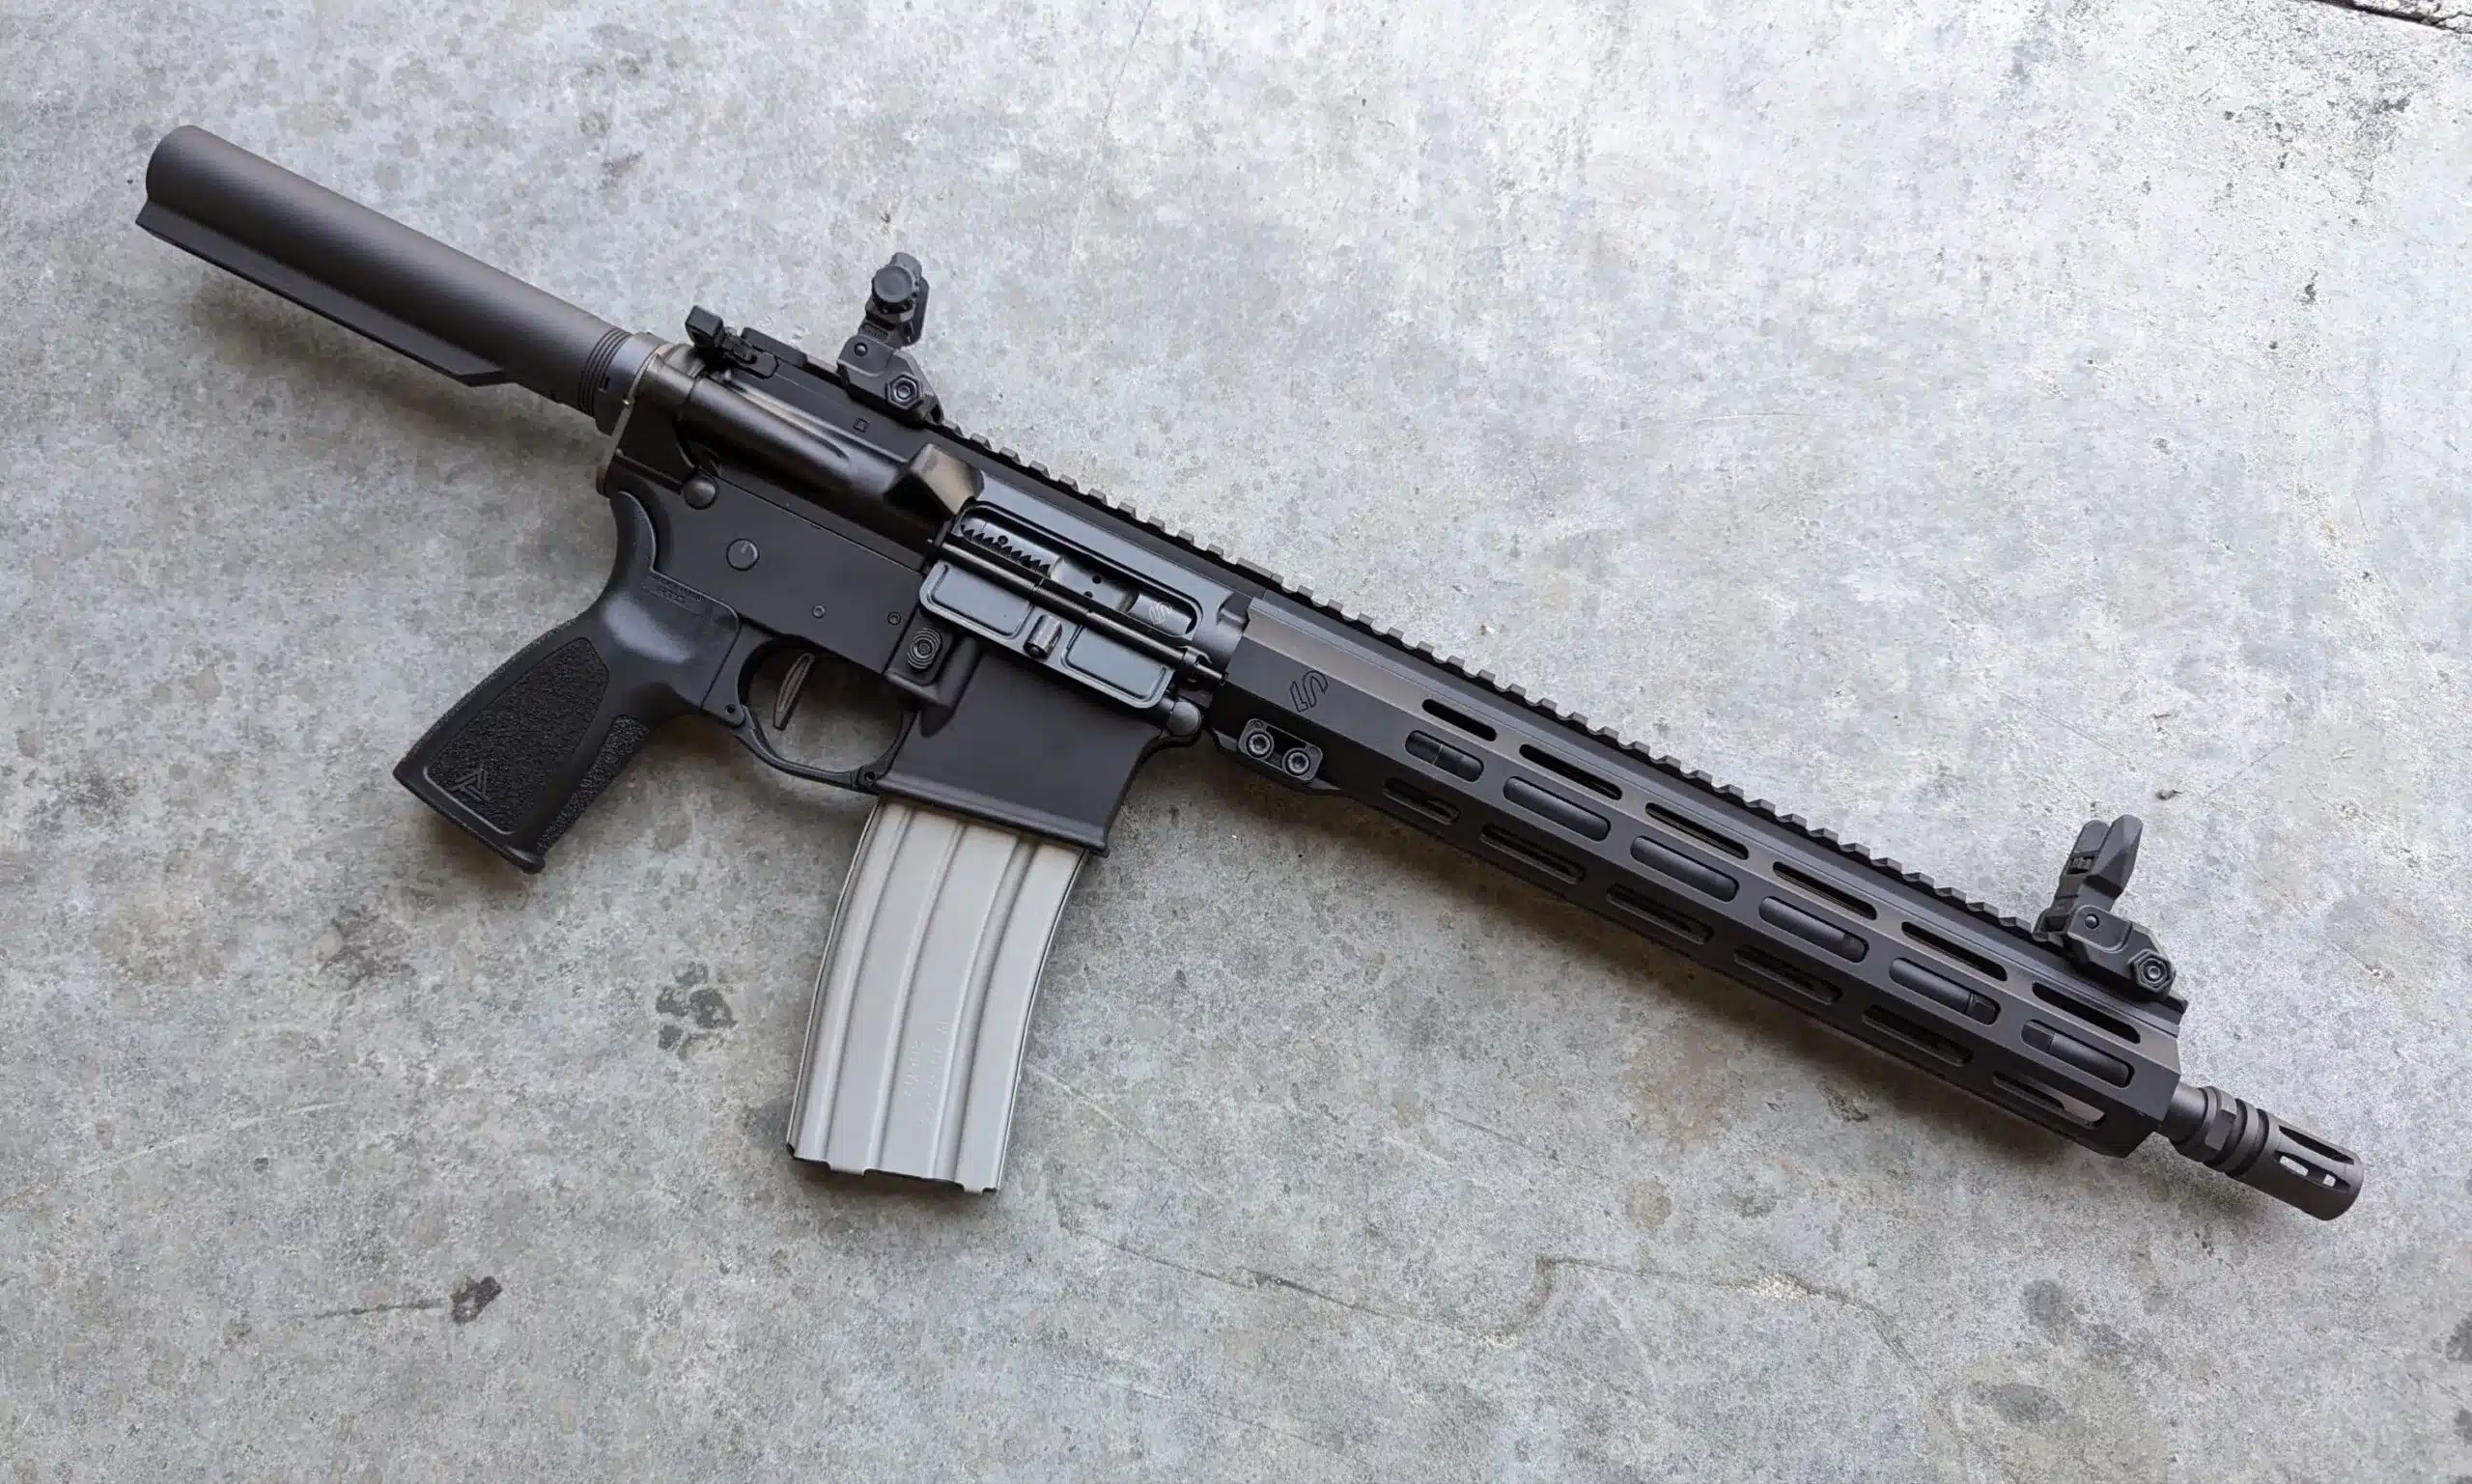 CLOSEOUT - L&S All-Rounder Carbine - 12.5 5.56mm Pistol, Black